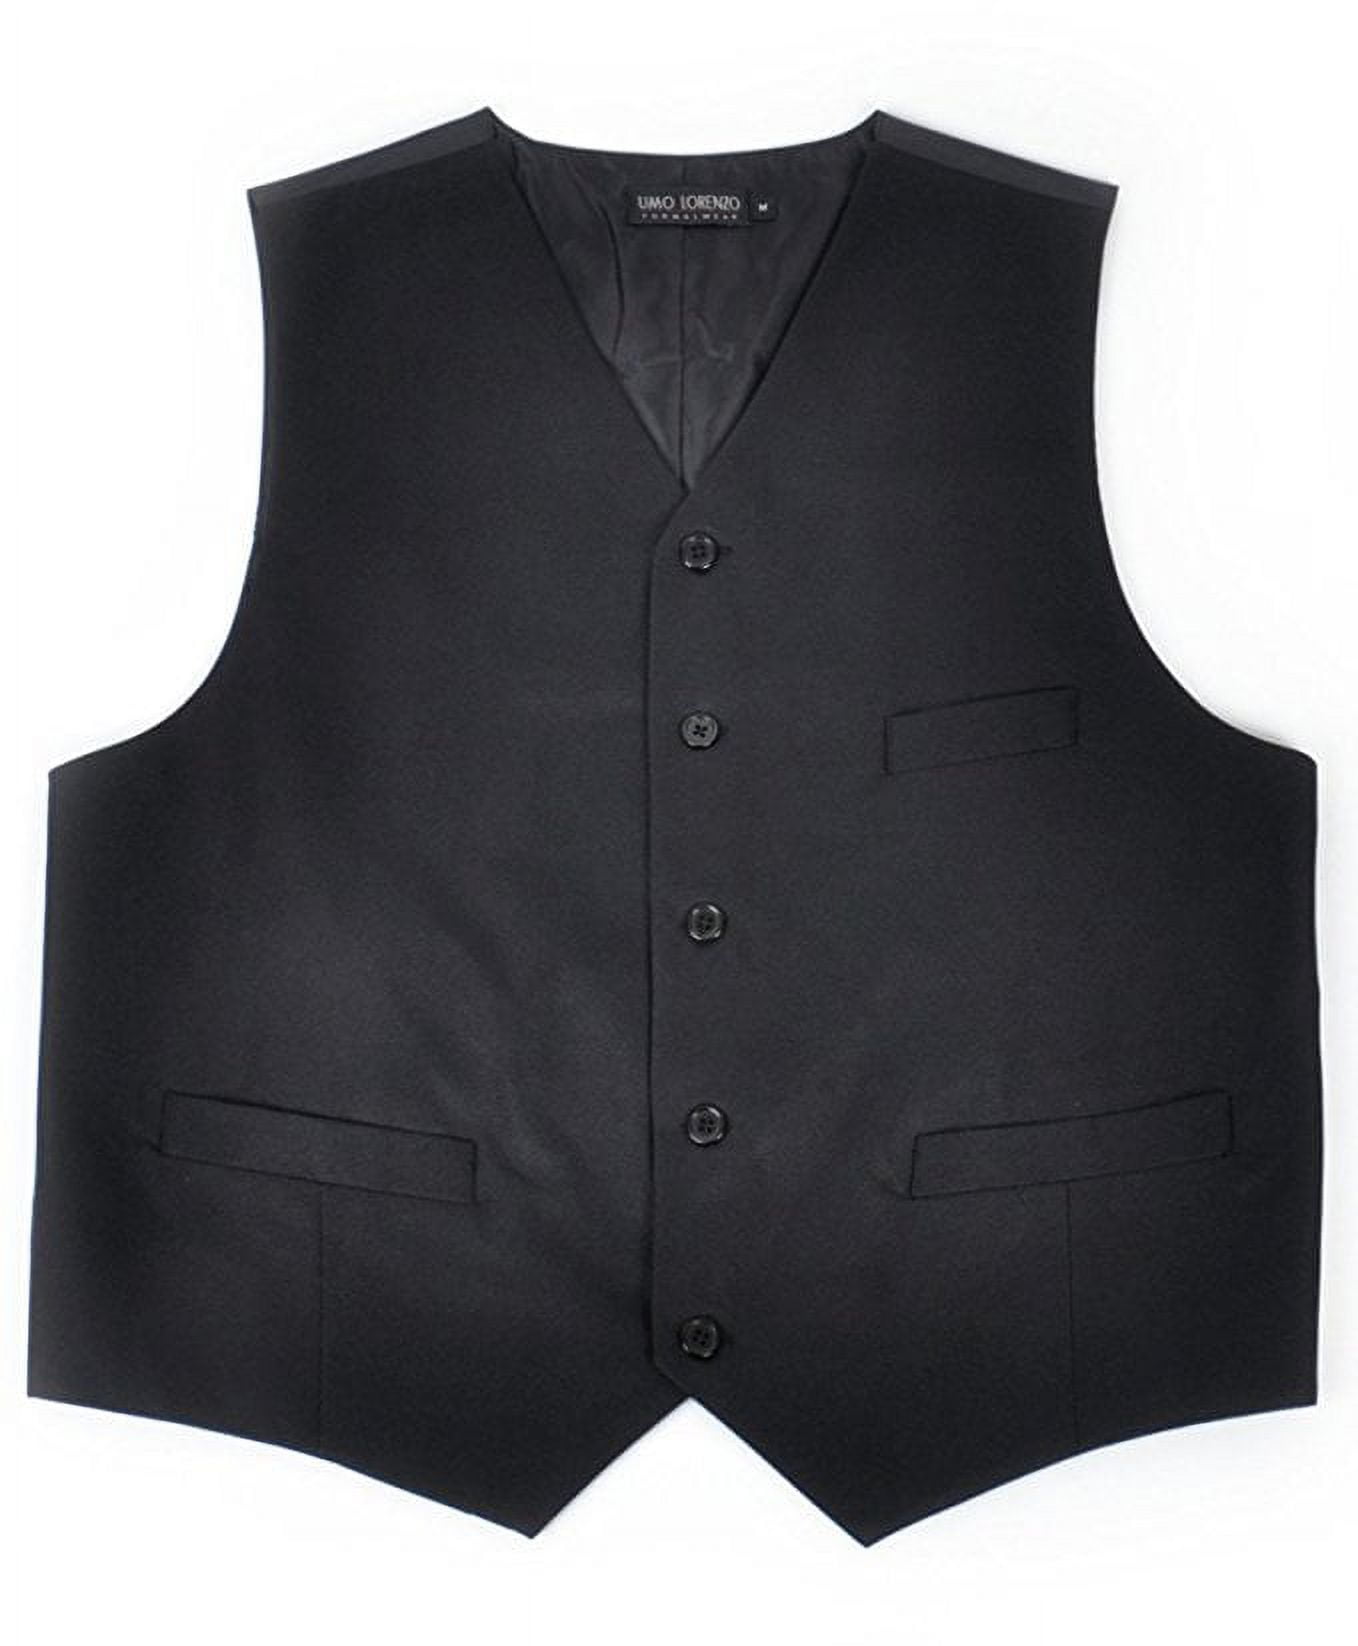 ZCFZJW Men's Suit Vest Formal Wedding Slim Fit Single-Breasted